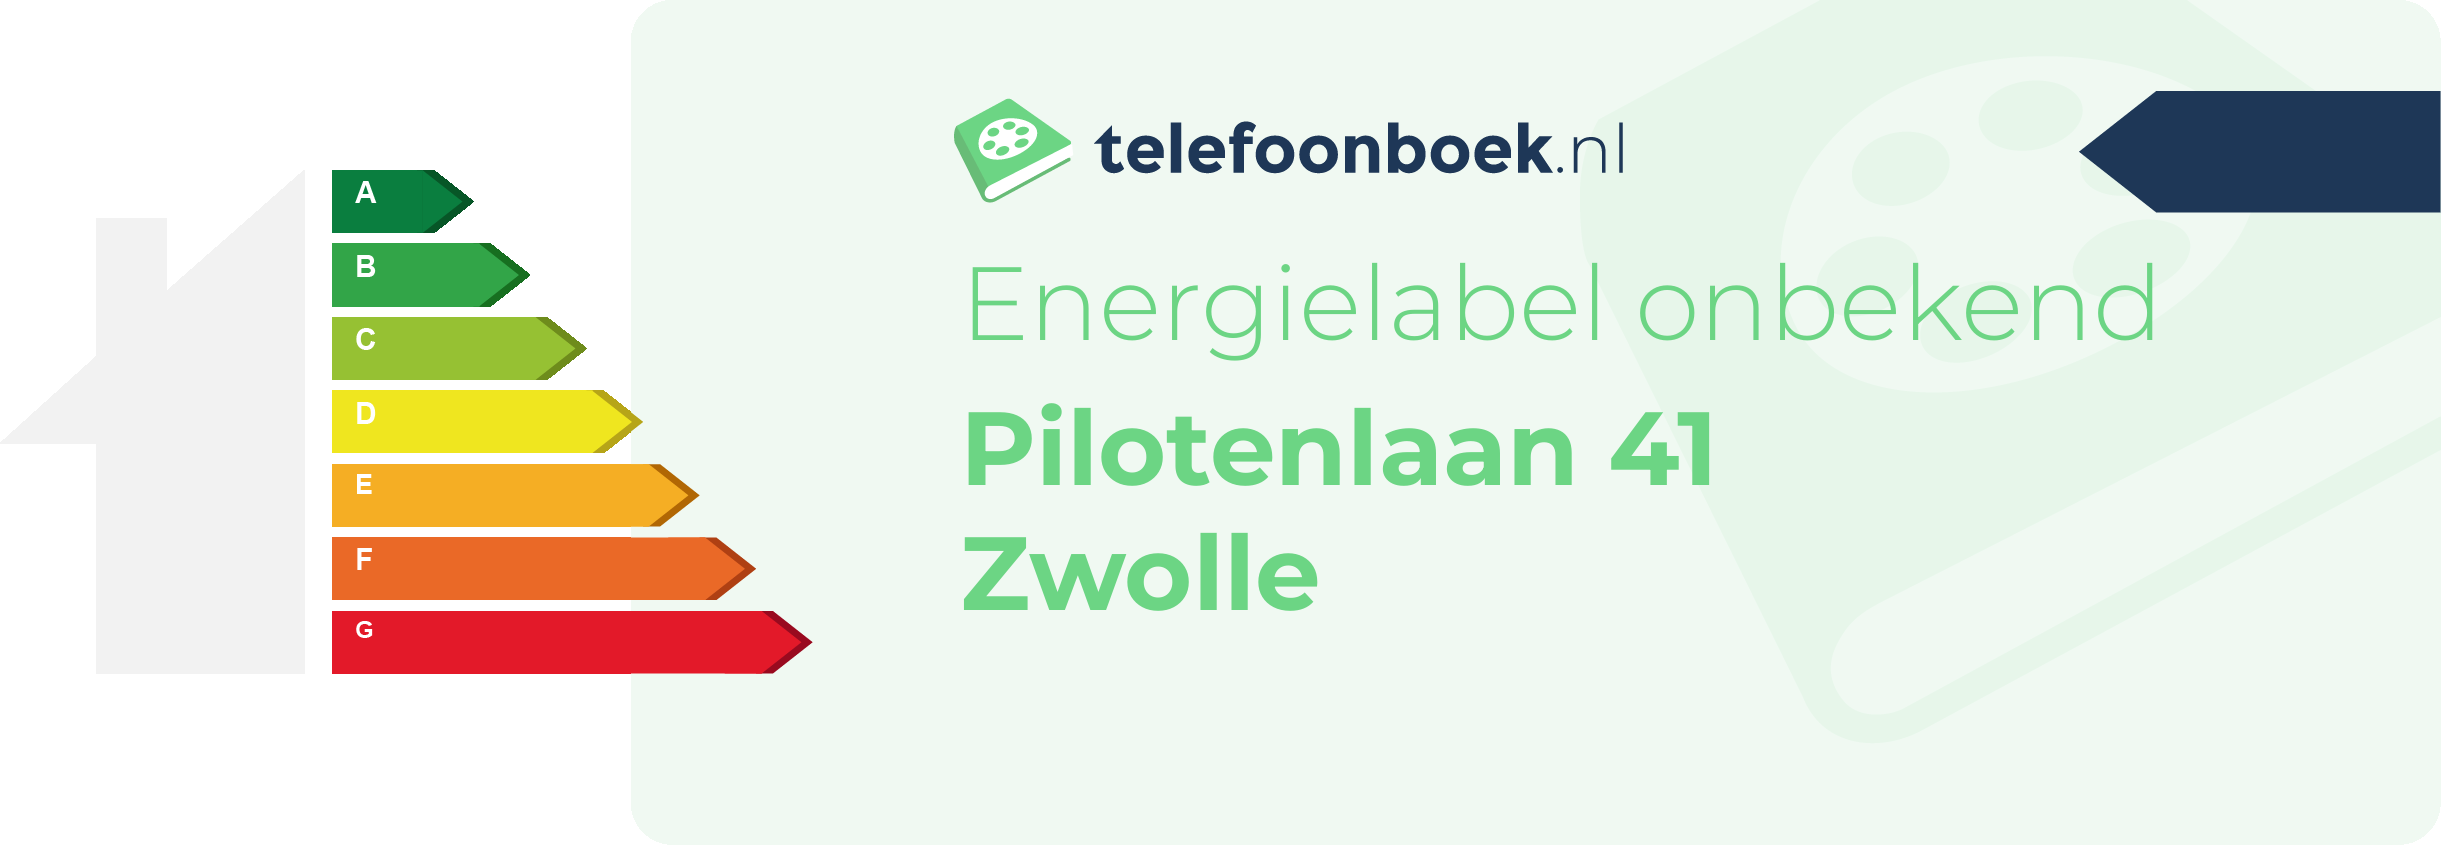 Energielabel Pilotenlaan 41 Zwolle